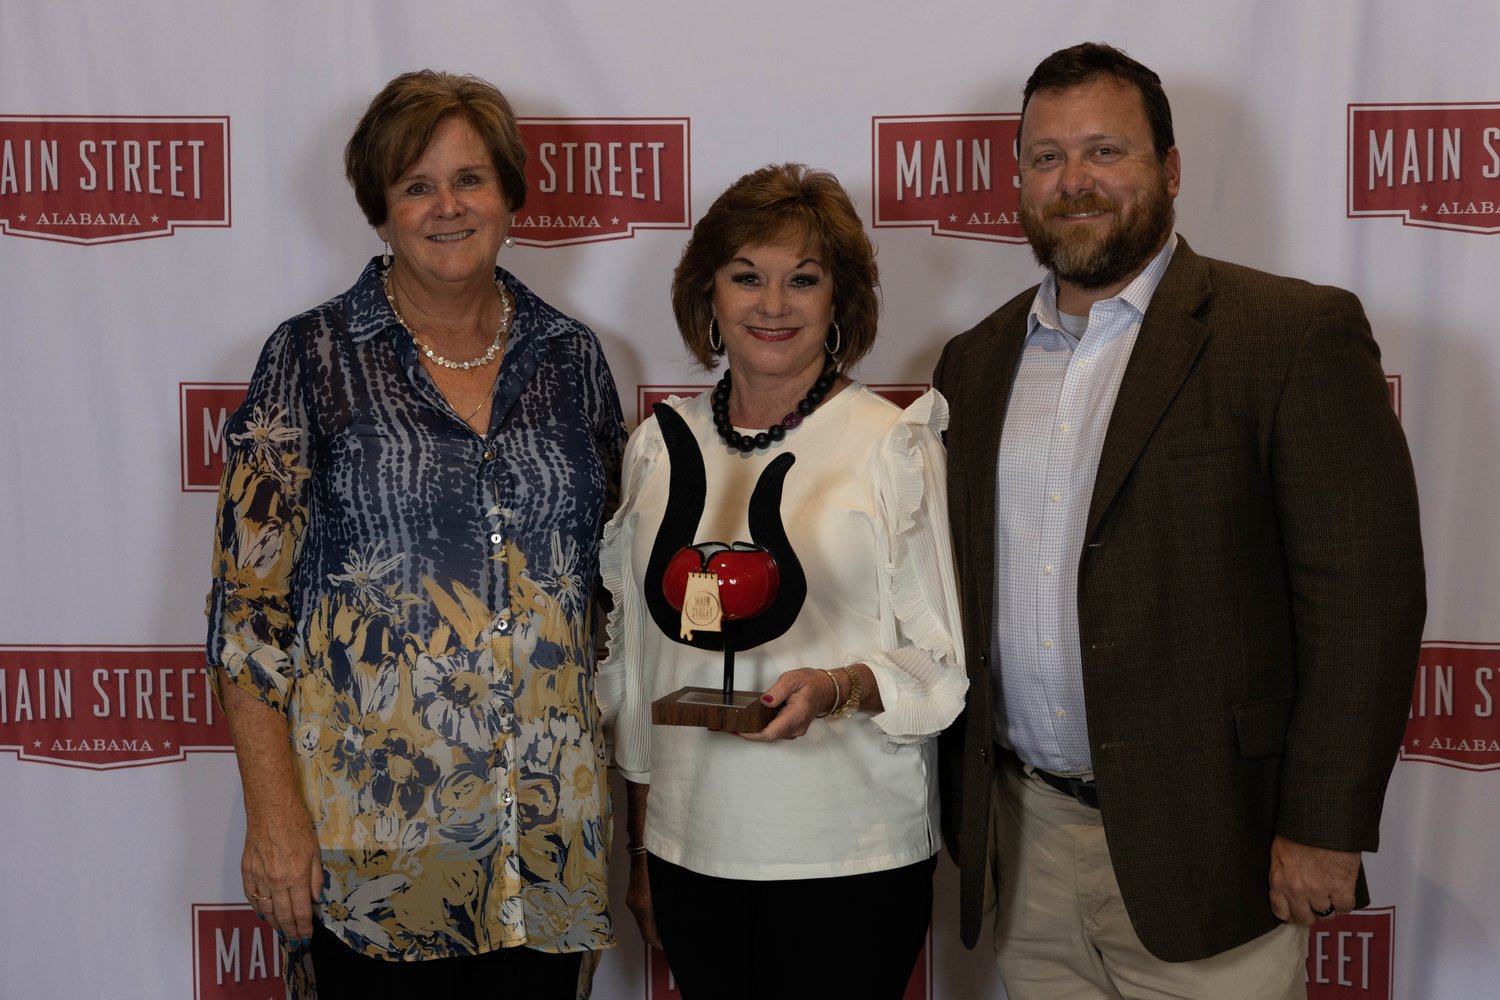 Executive Director Darrelyn Dunmore, Board Member Frances Holk-Jones, and President Chad Watkins accepted the awards at the Main Street Alabama Awards Banquet.